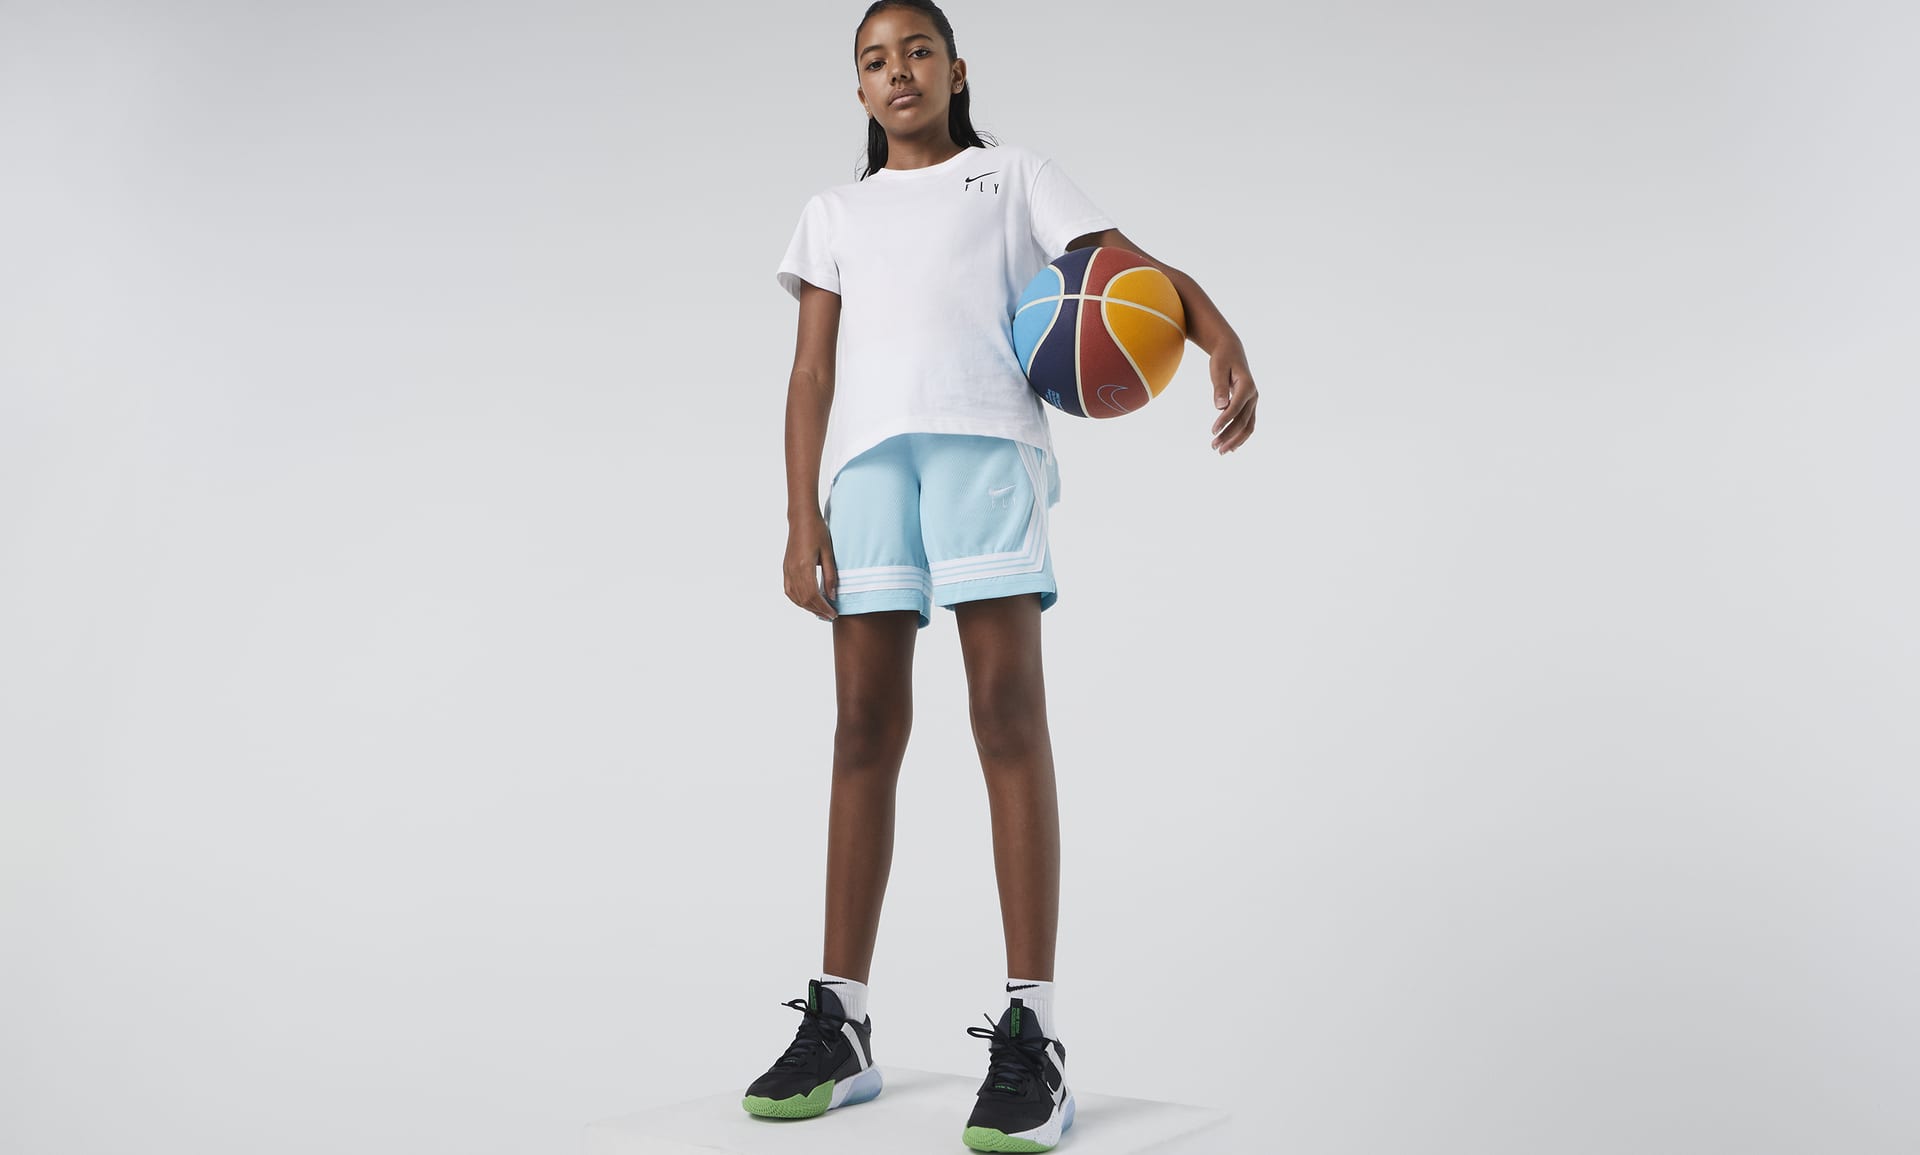  Nike Big Kids Girls' Fly Crossover Training Shorts (Black/White)  Size M: Clothing, Shoes & Jewelry